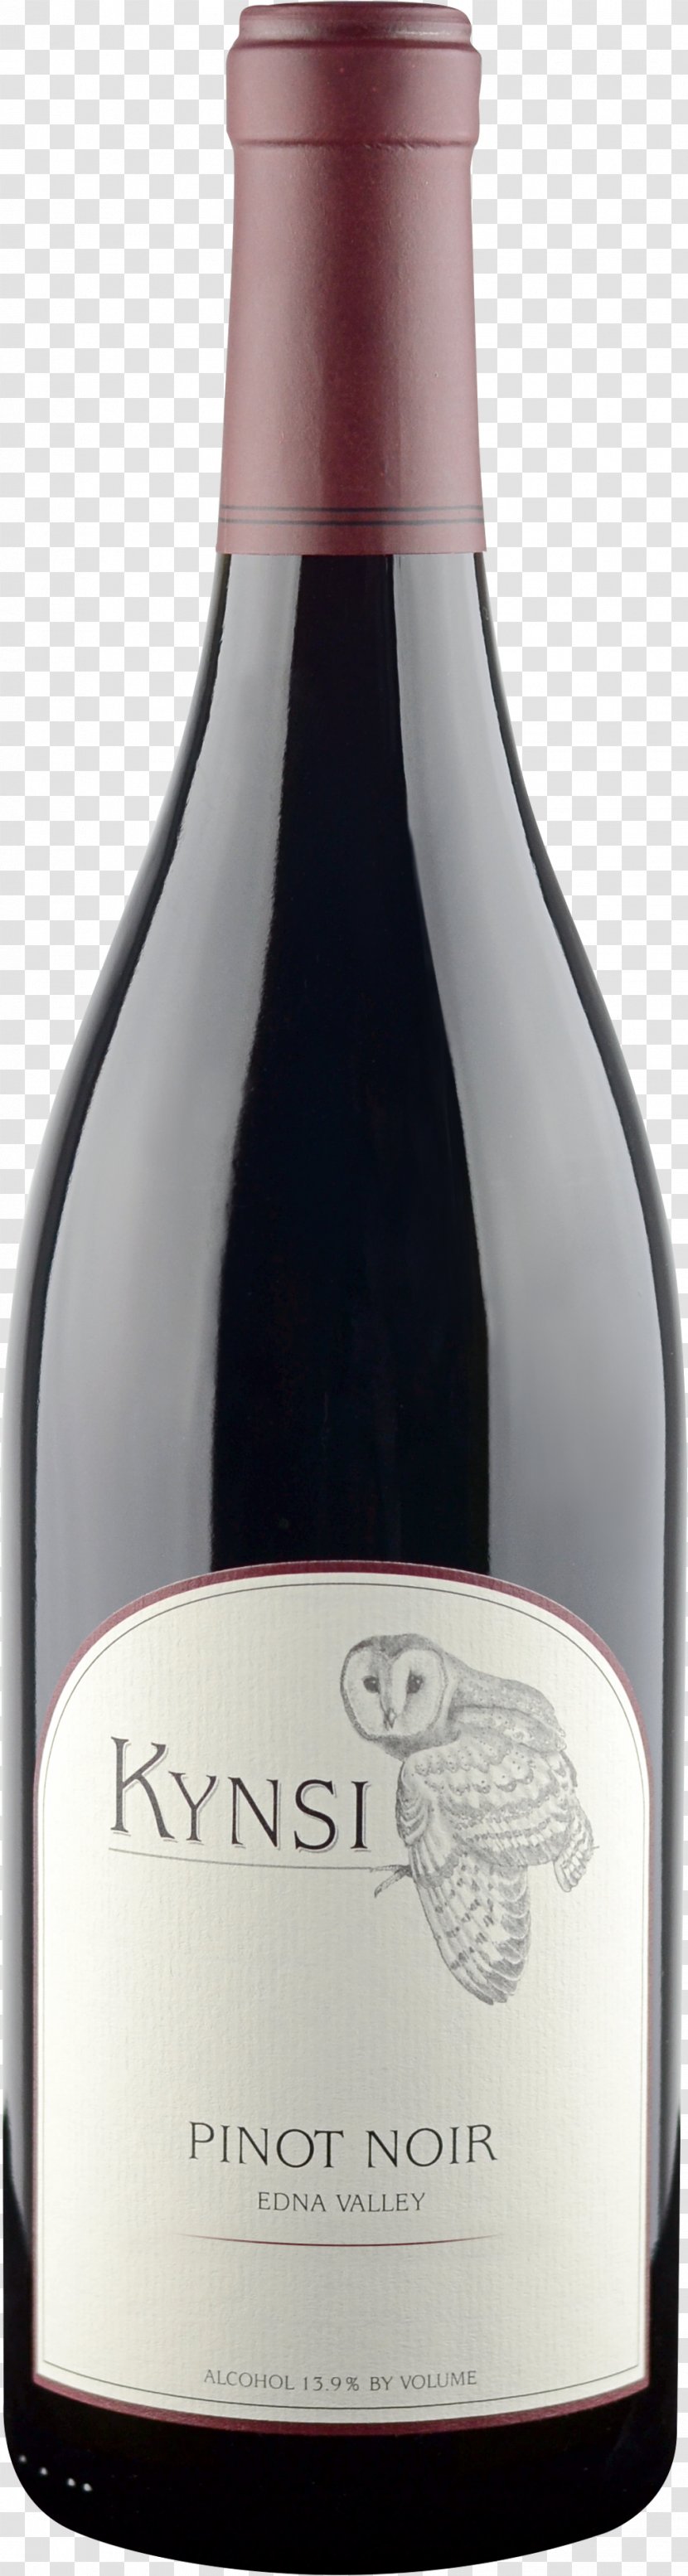 Red Wine Cabernet Sauvignon Pinot Noir Shiraz Transparent PNG